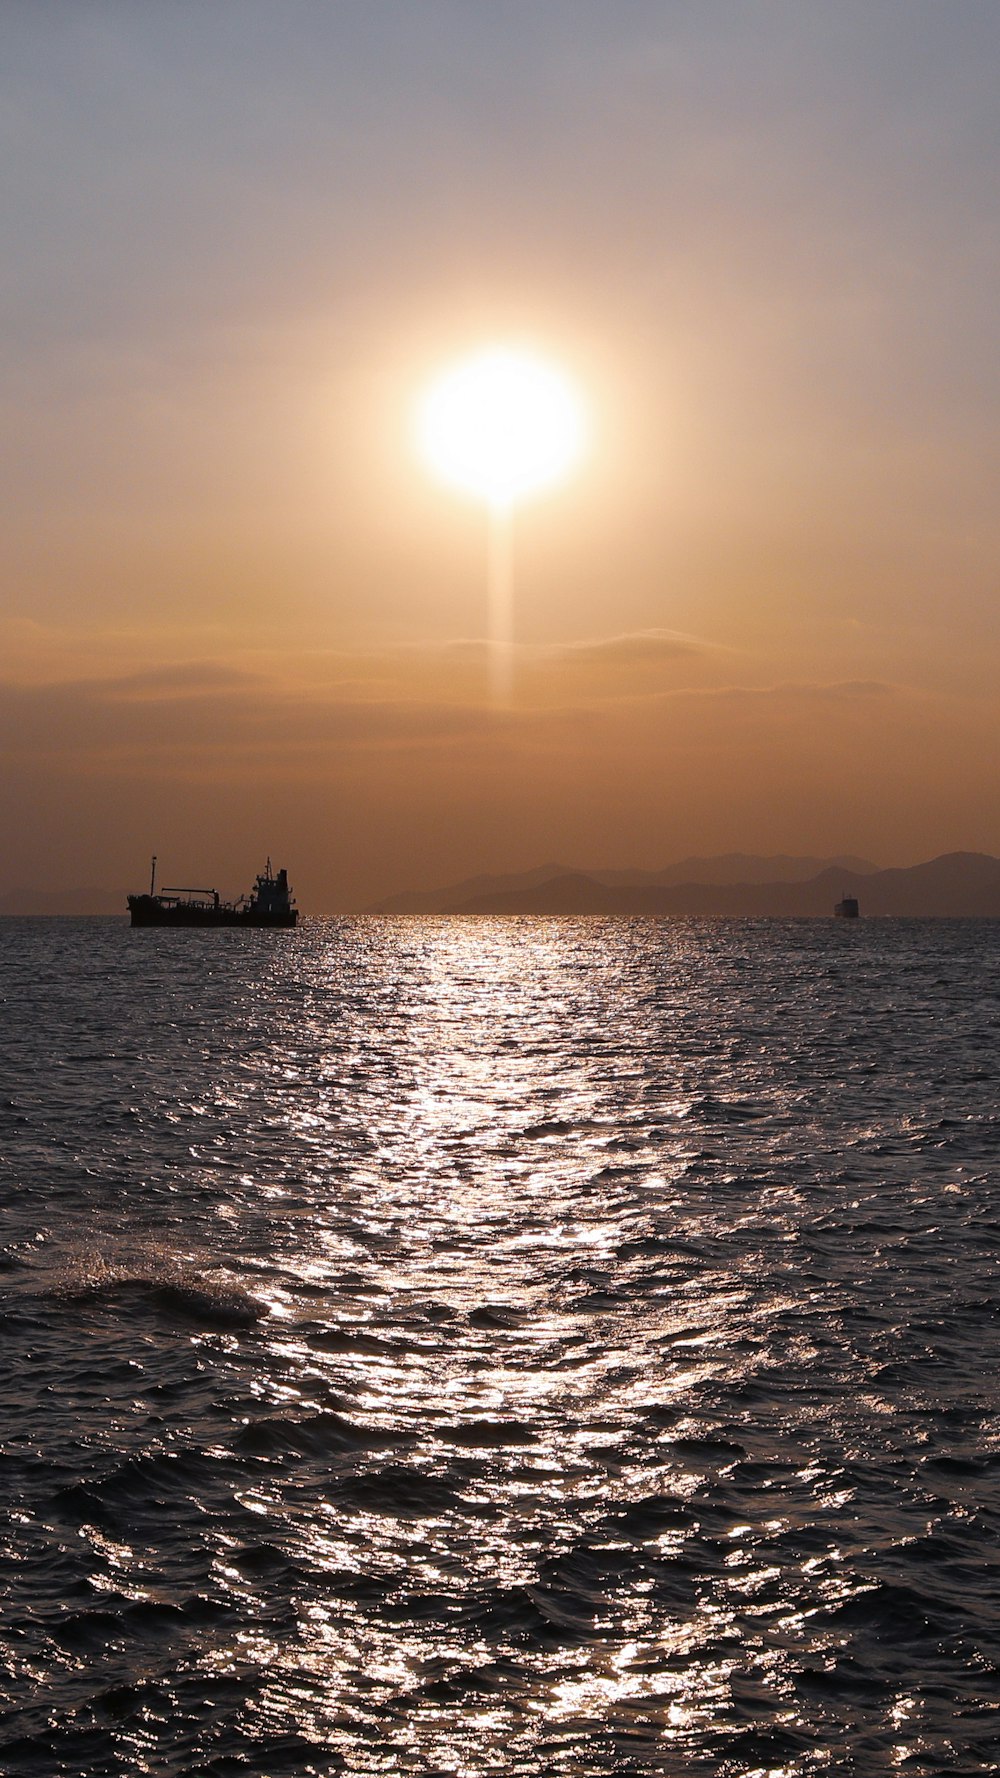 Silhouette des Bootes auf See bei Sonnenuntergang